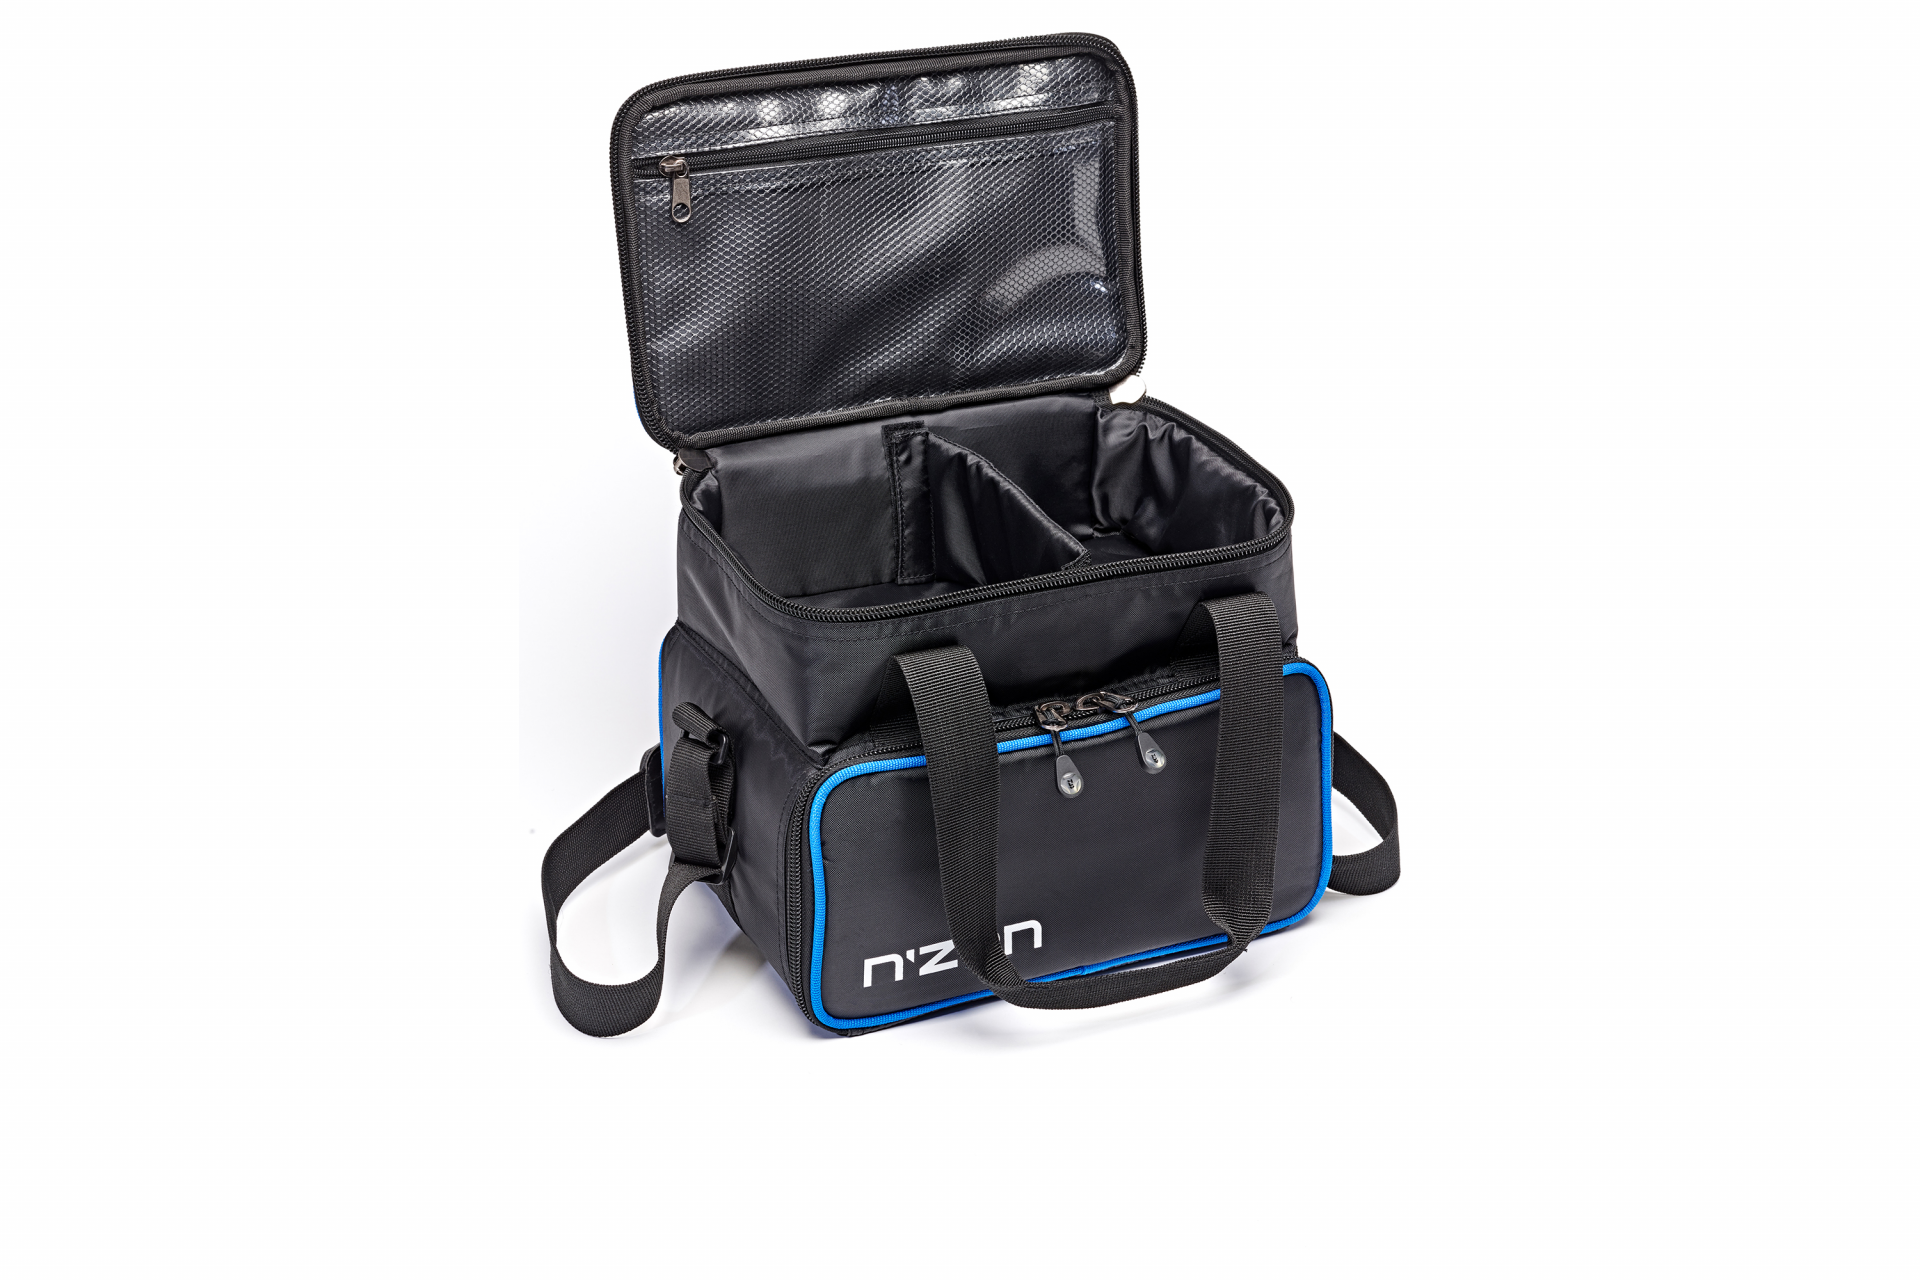 N'Zon Tackle Bag <span>| M-size</span>